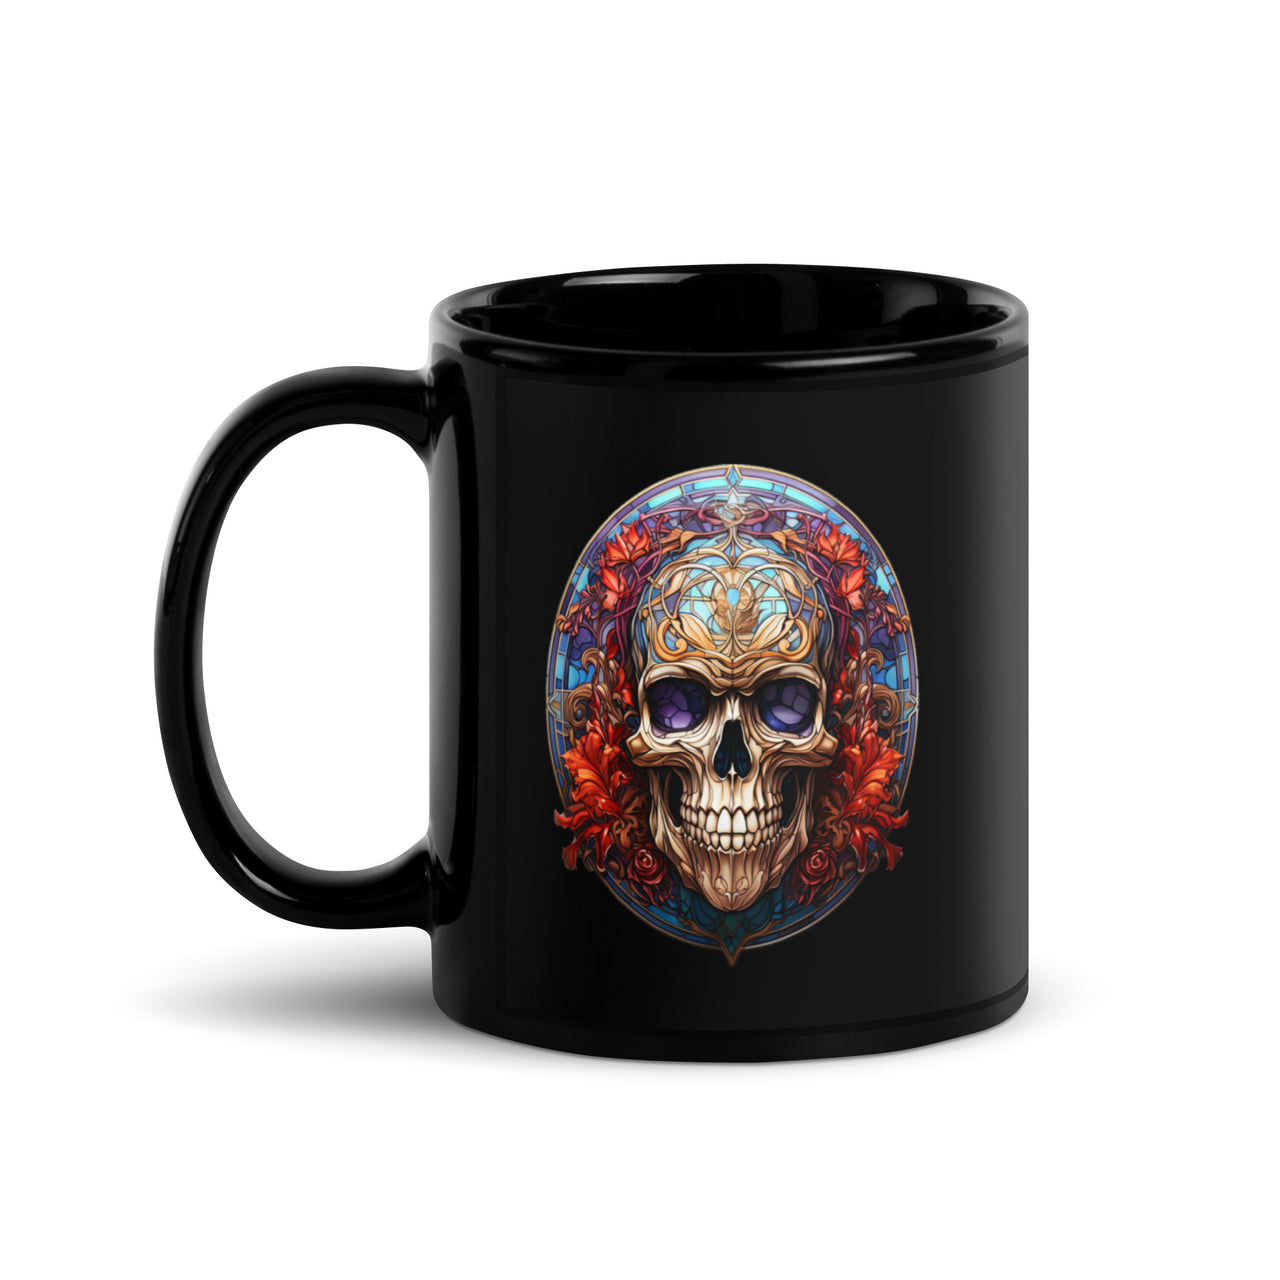 Gothic Stained Glass Skull Design Black Coffee Mug